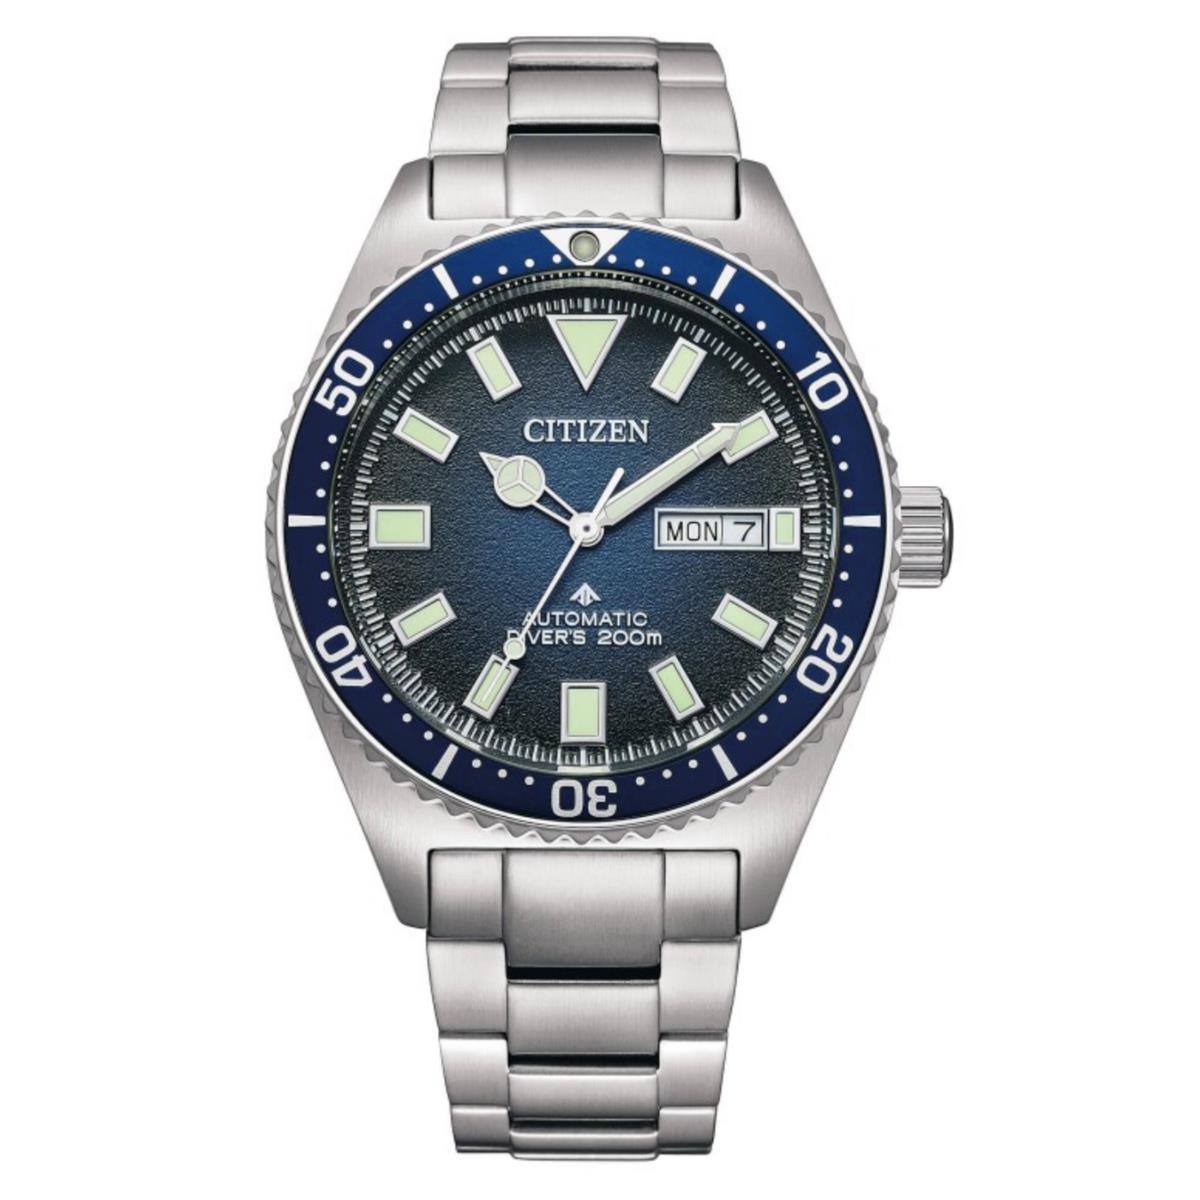 Citizen Men`s Promaster Diver Automatic Blue Dial Watch - NY0129-58L - Dial: Blue, Band: Silver, Bezel: Black